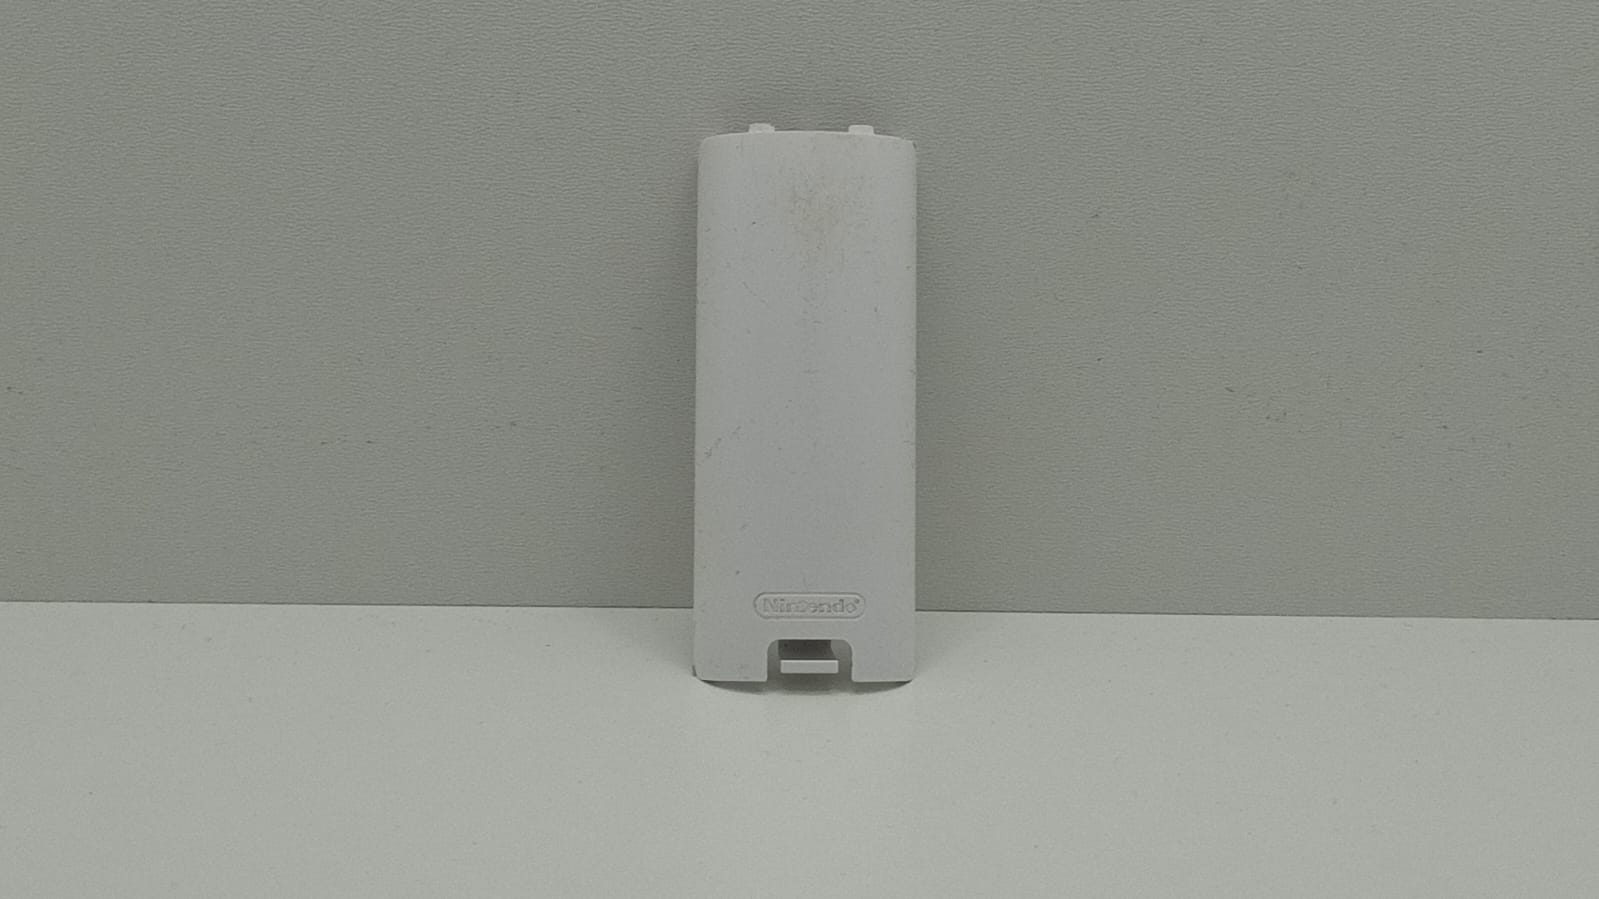 Capac - Nintendo Wii Remote